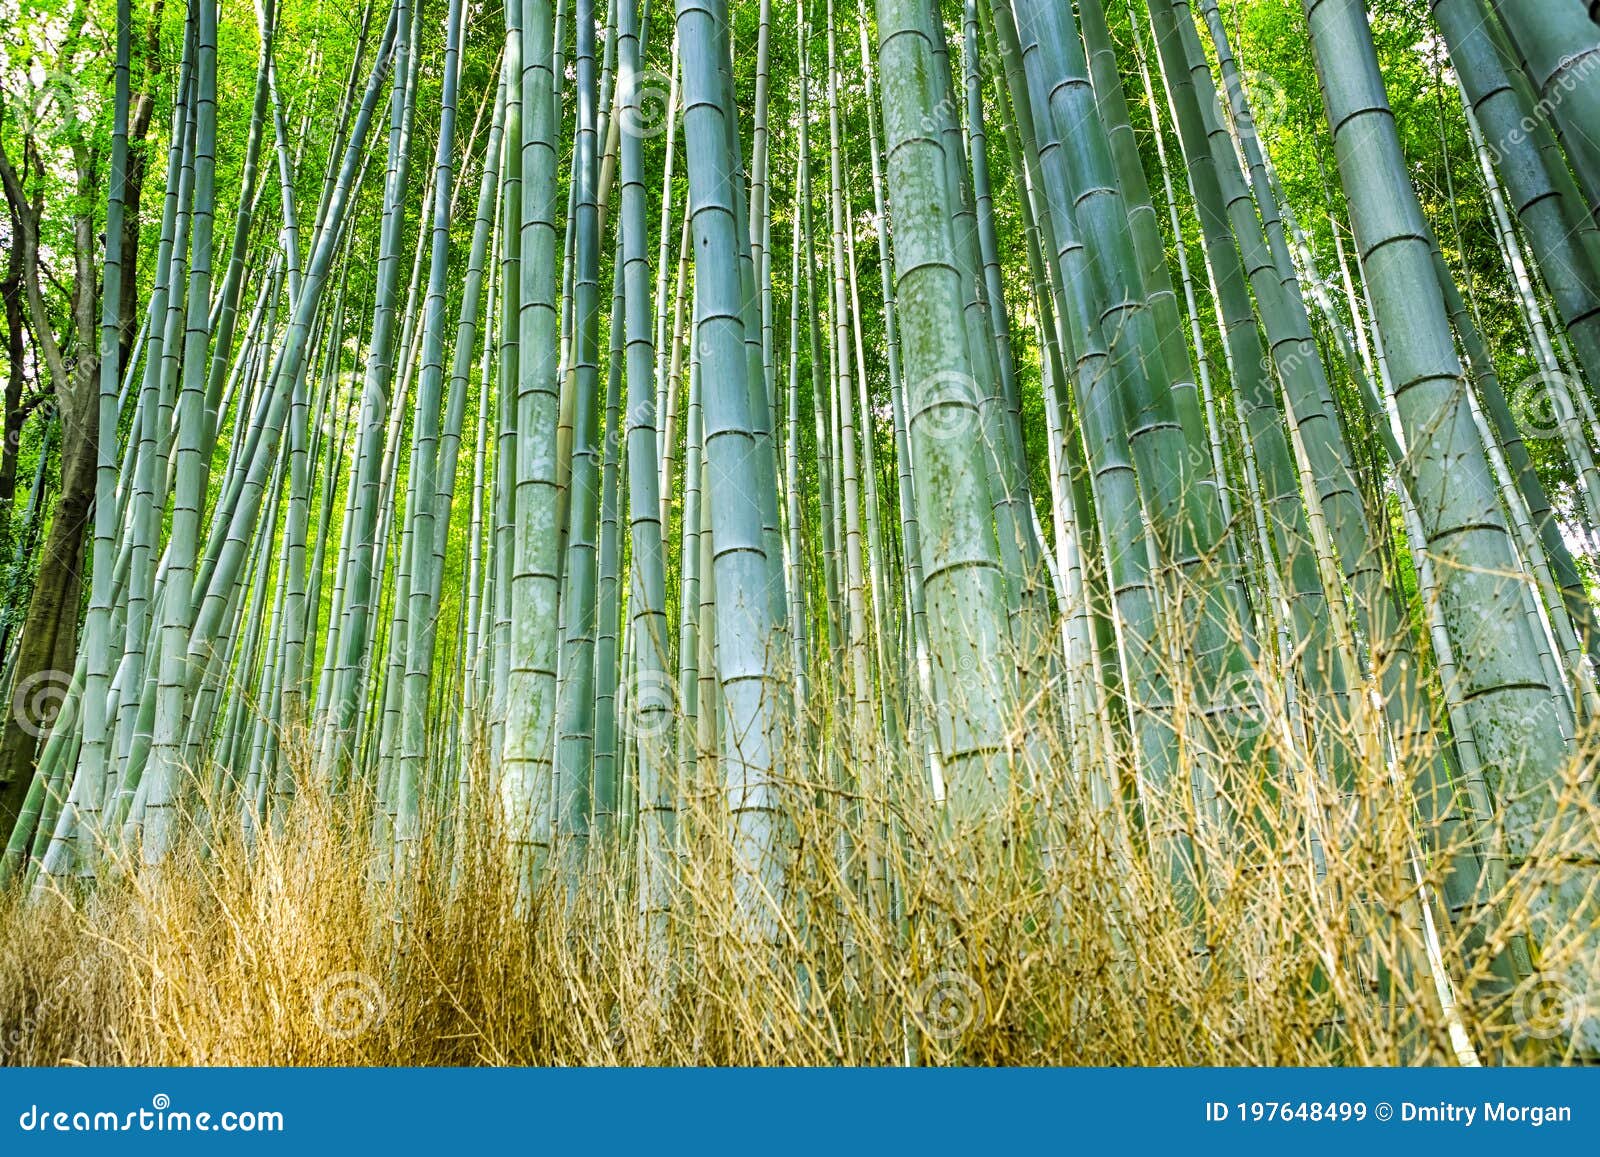 green sagano bamboo forest in japan